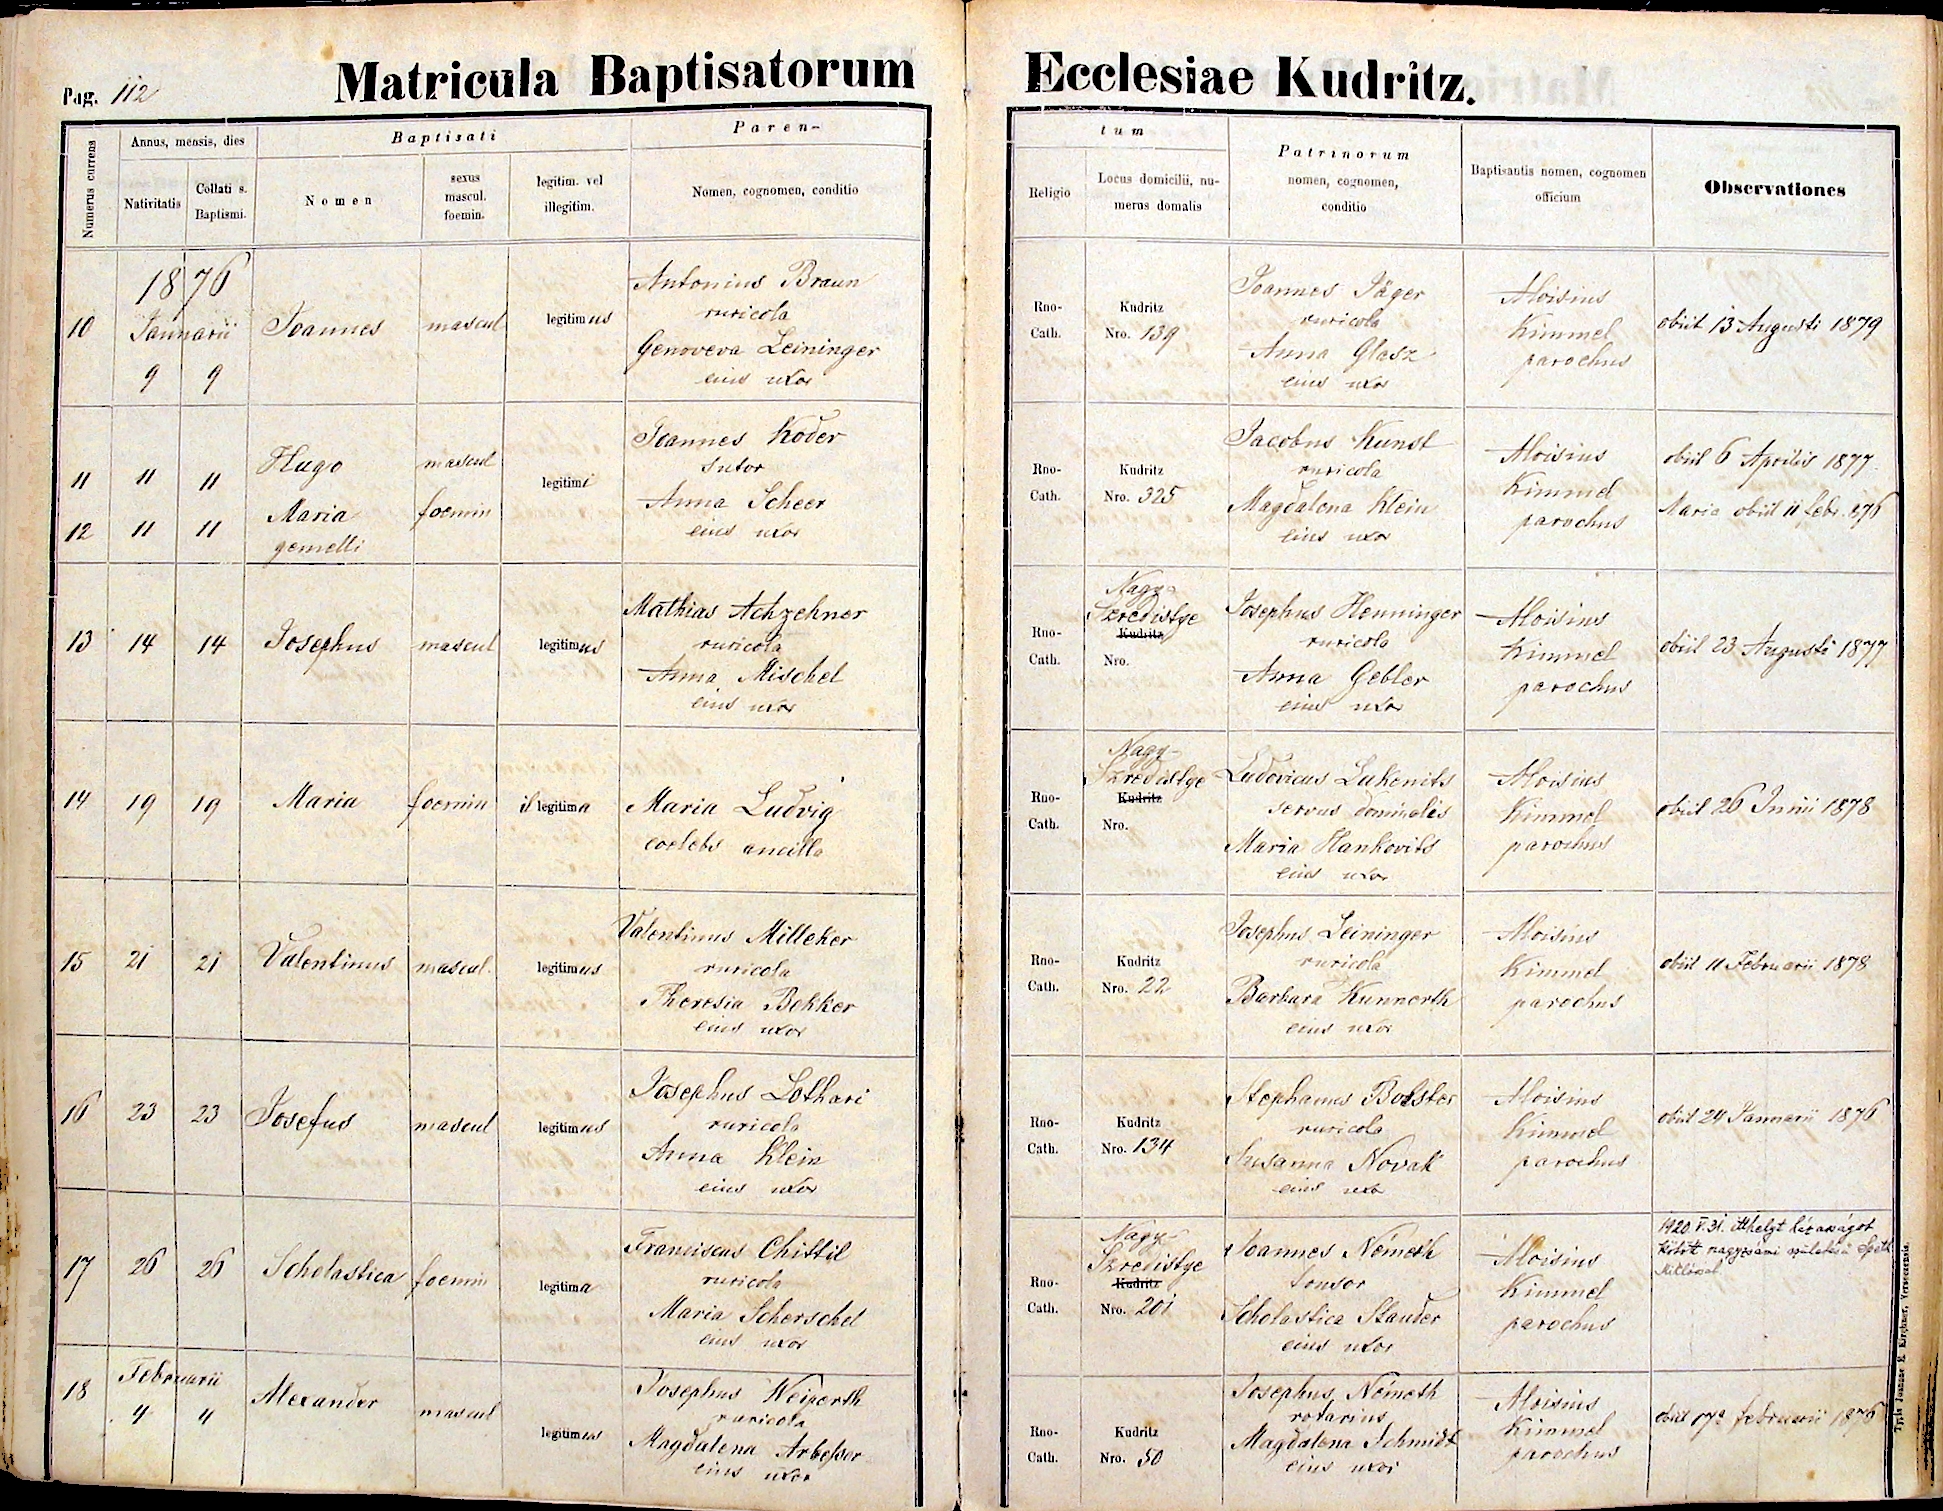 images/church_records/BIRTHS/1870-1879B/1876/112